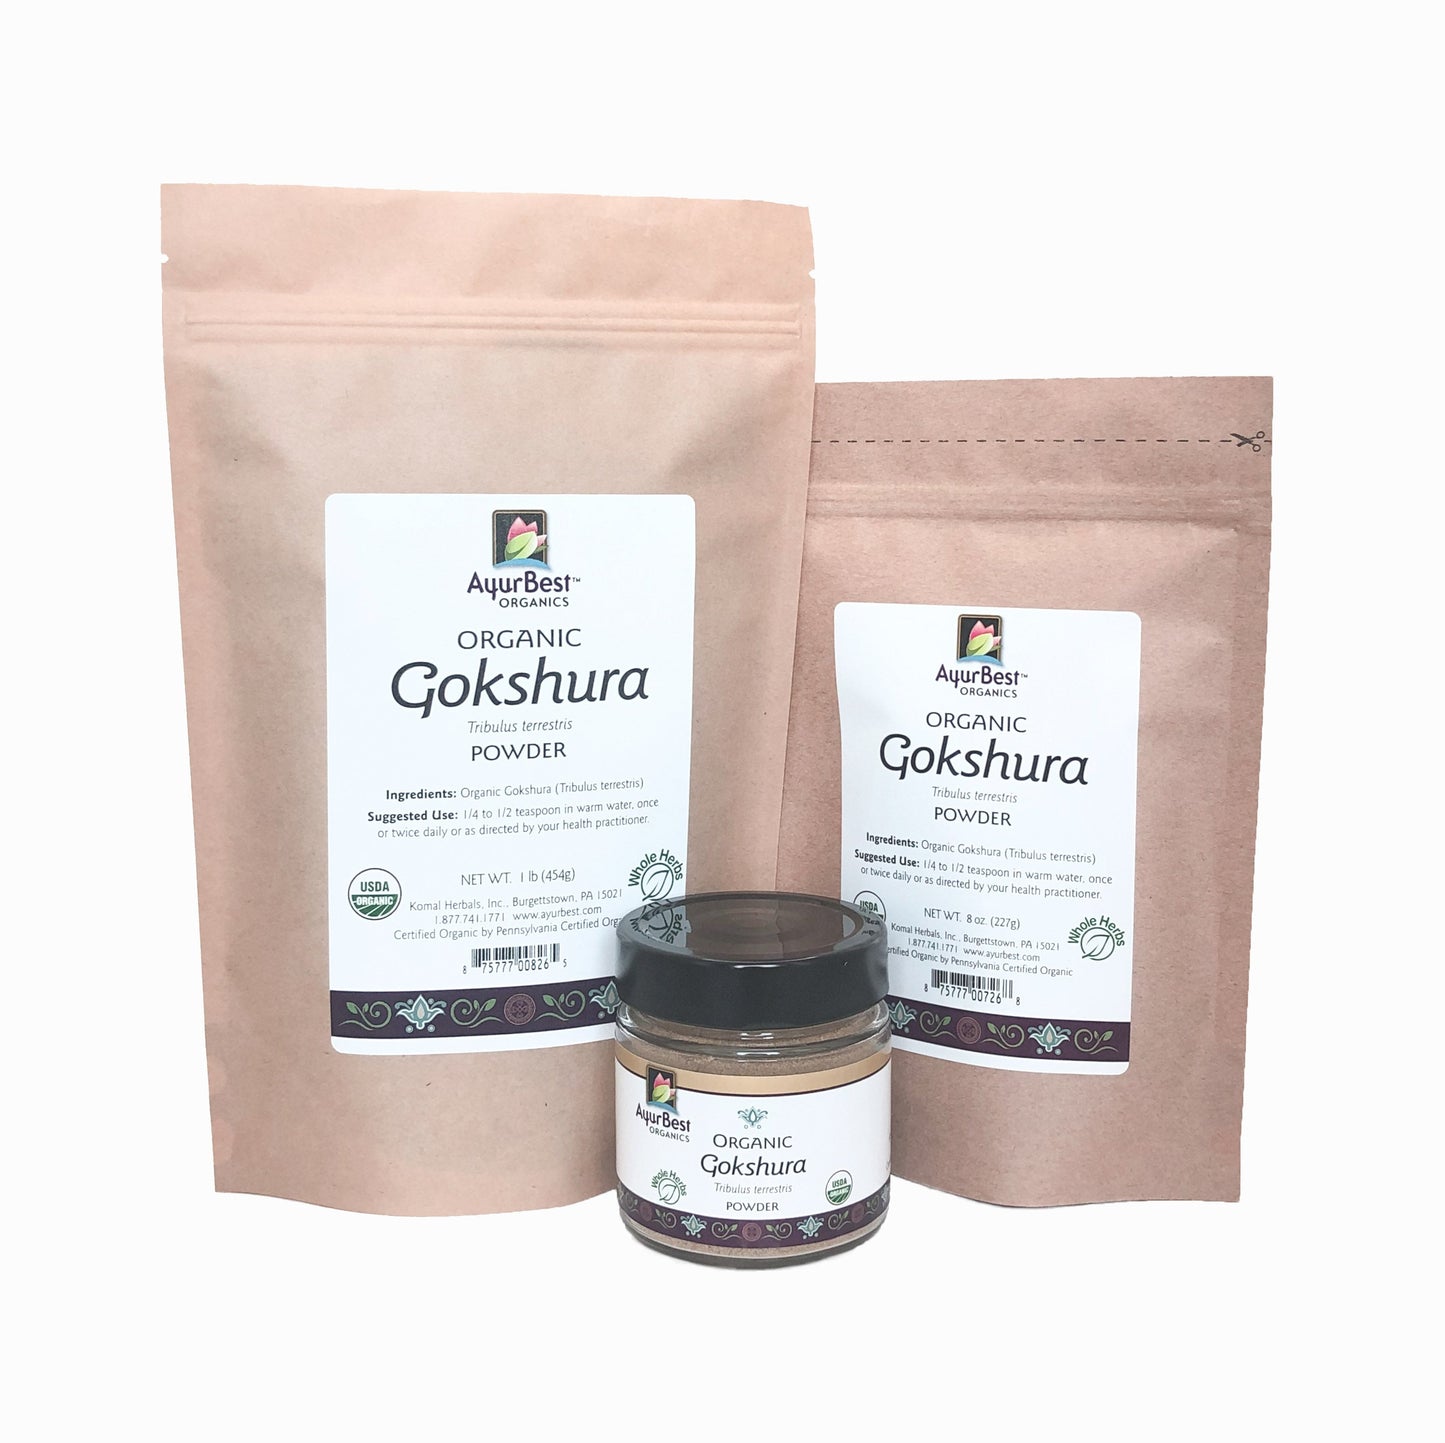 Wholesale Spices & Herbs - Gokshura Powder, Organic-Tribulus terrestris - 8oz (227g) Bag